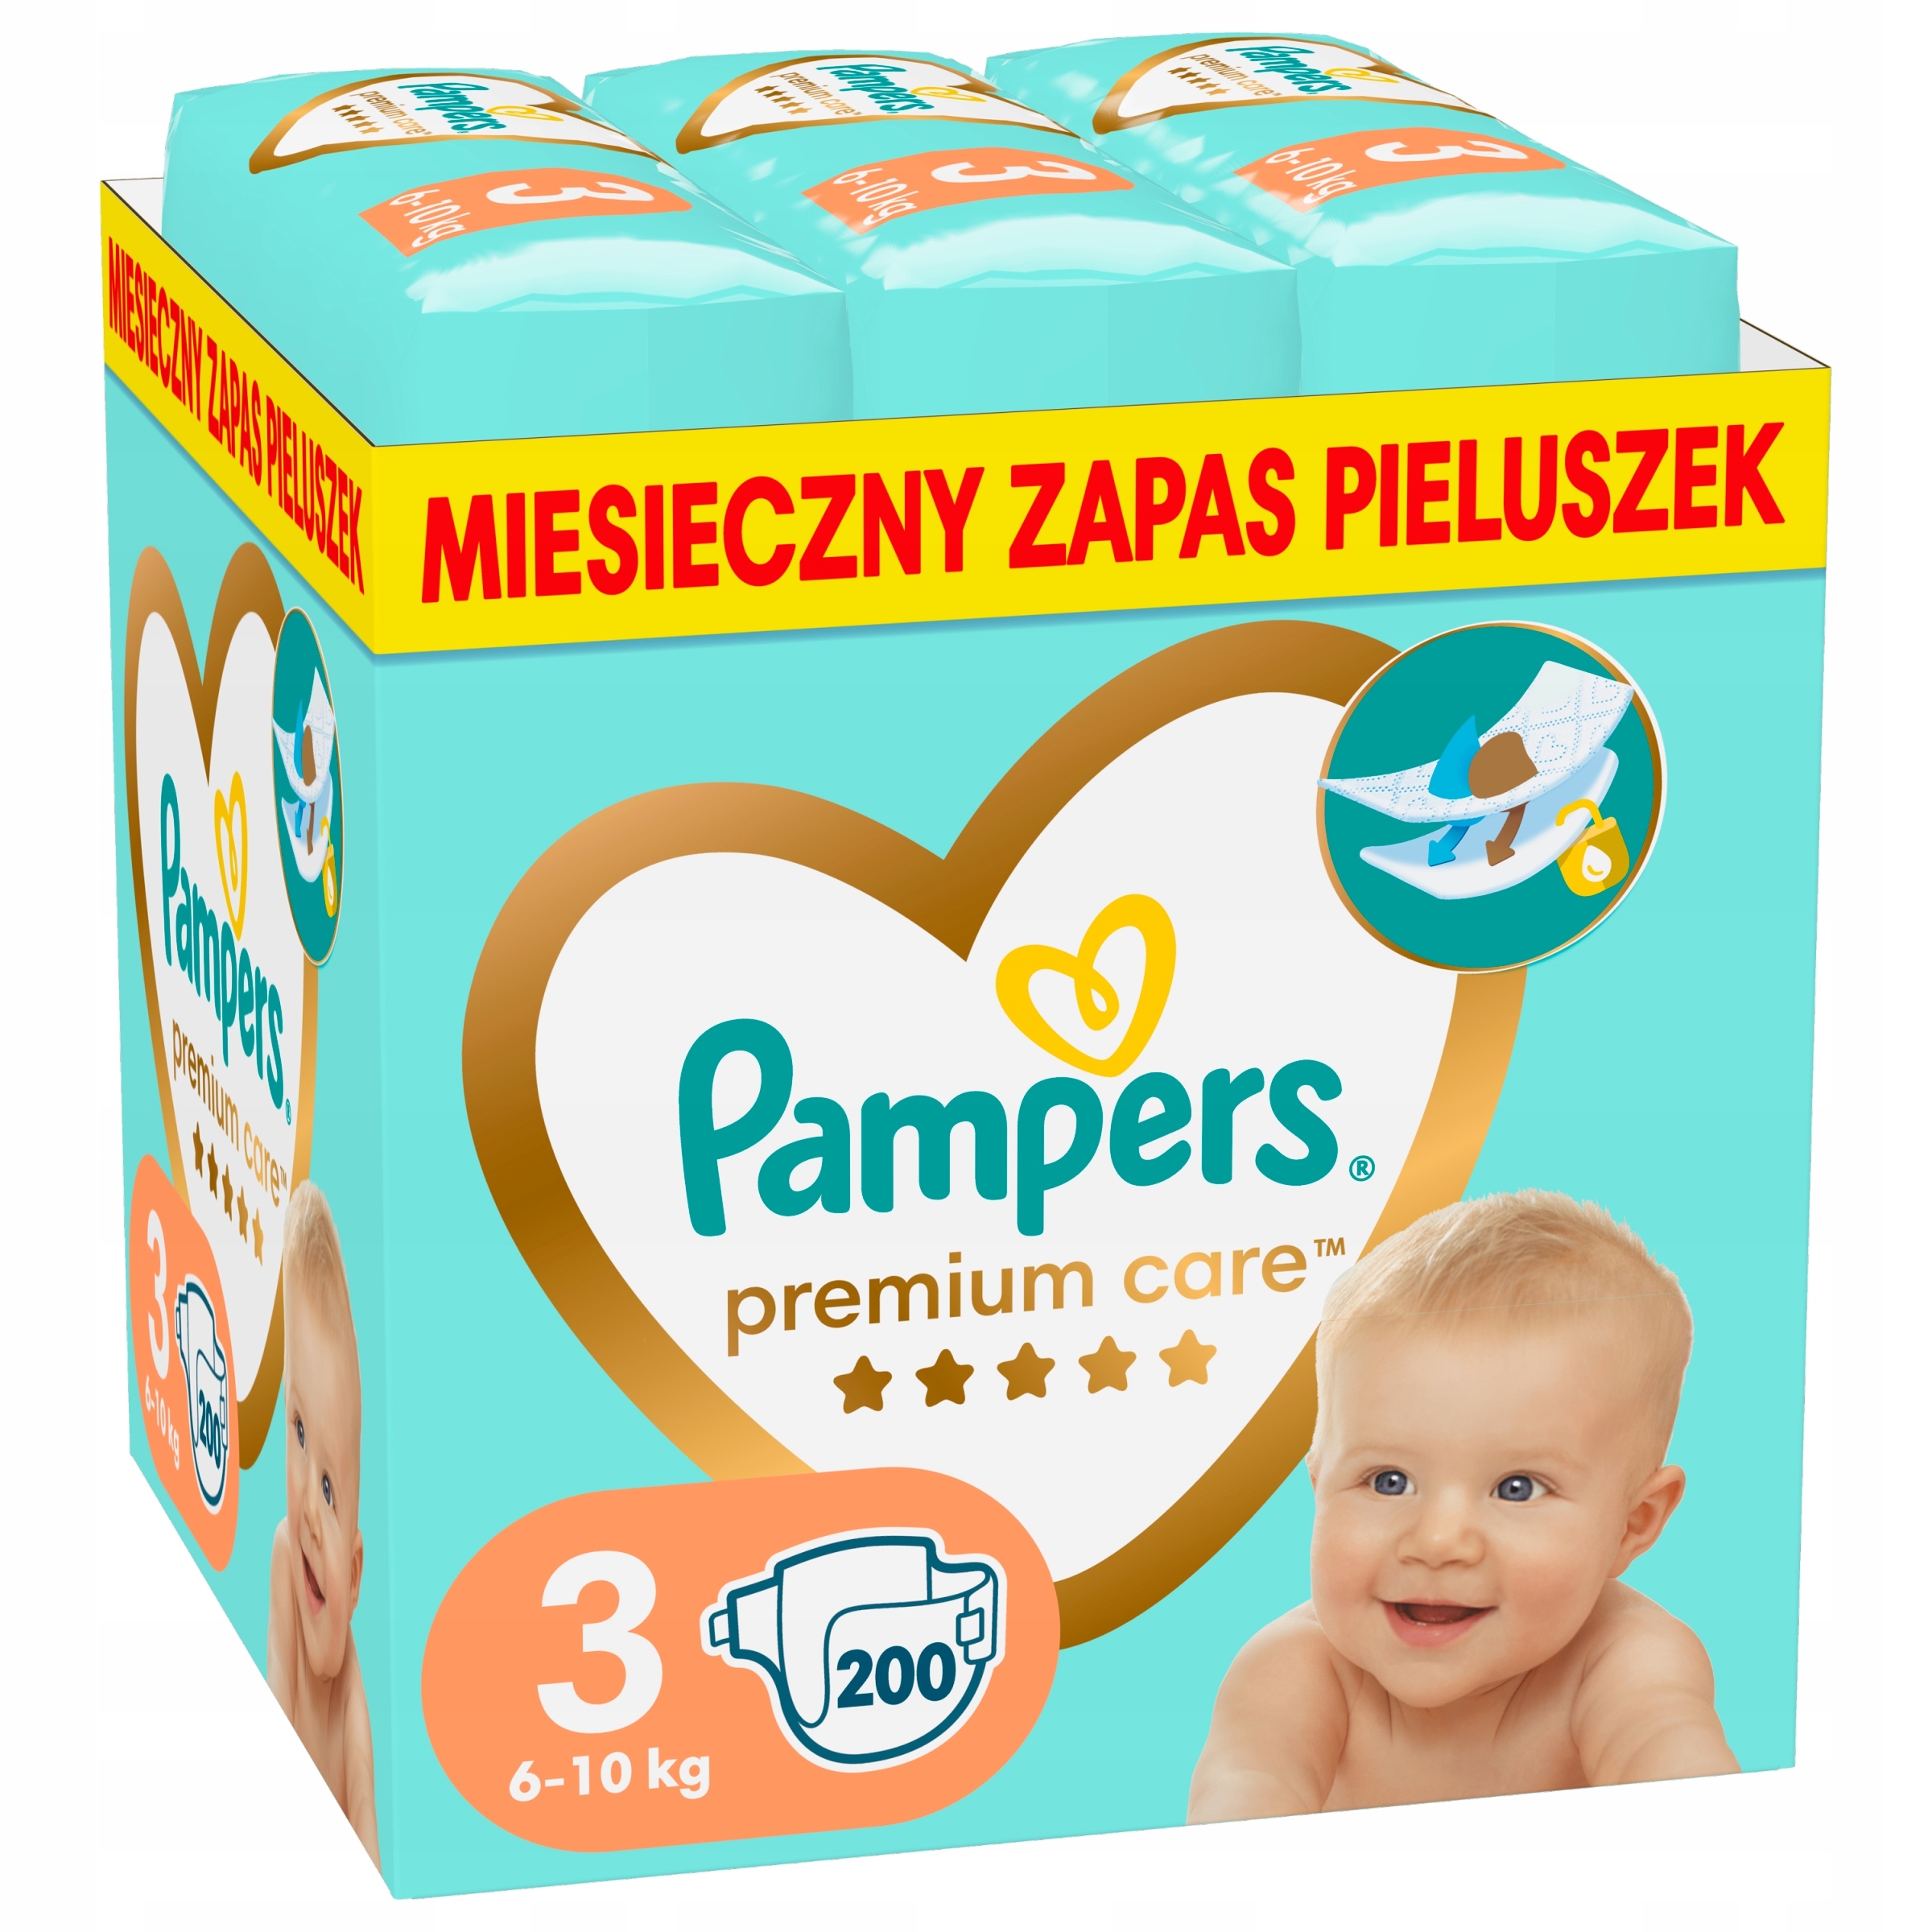 pieluszki pampers 1 2 mini newborn 168 sztuk allegro